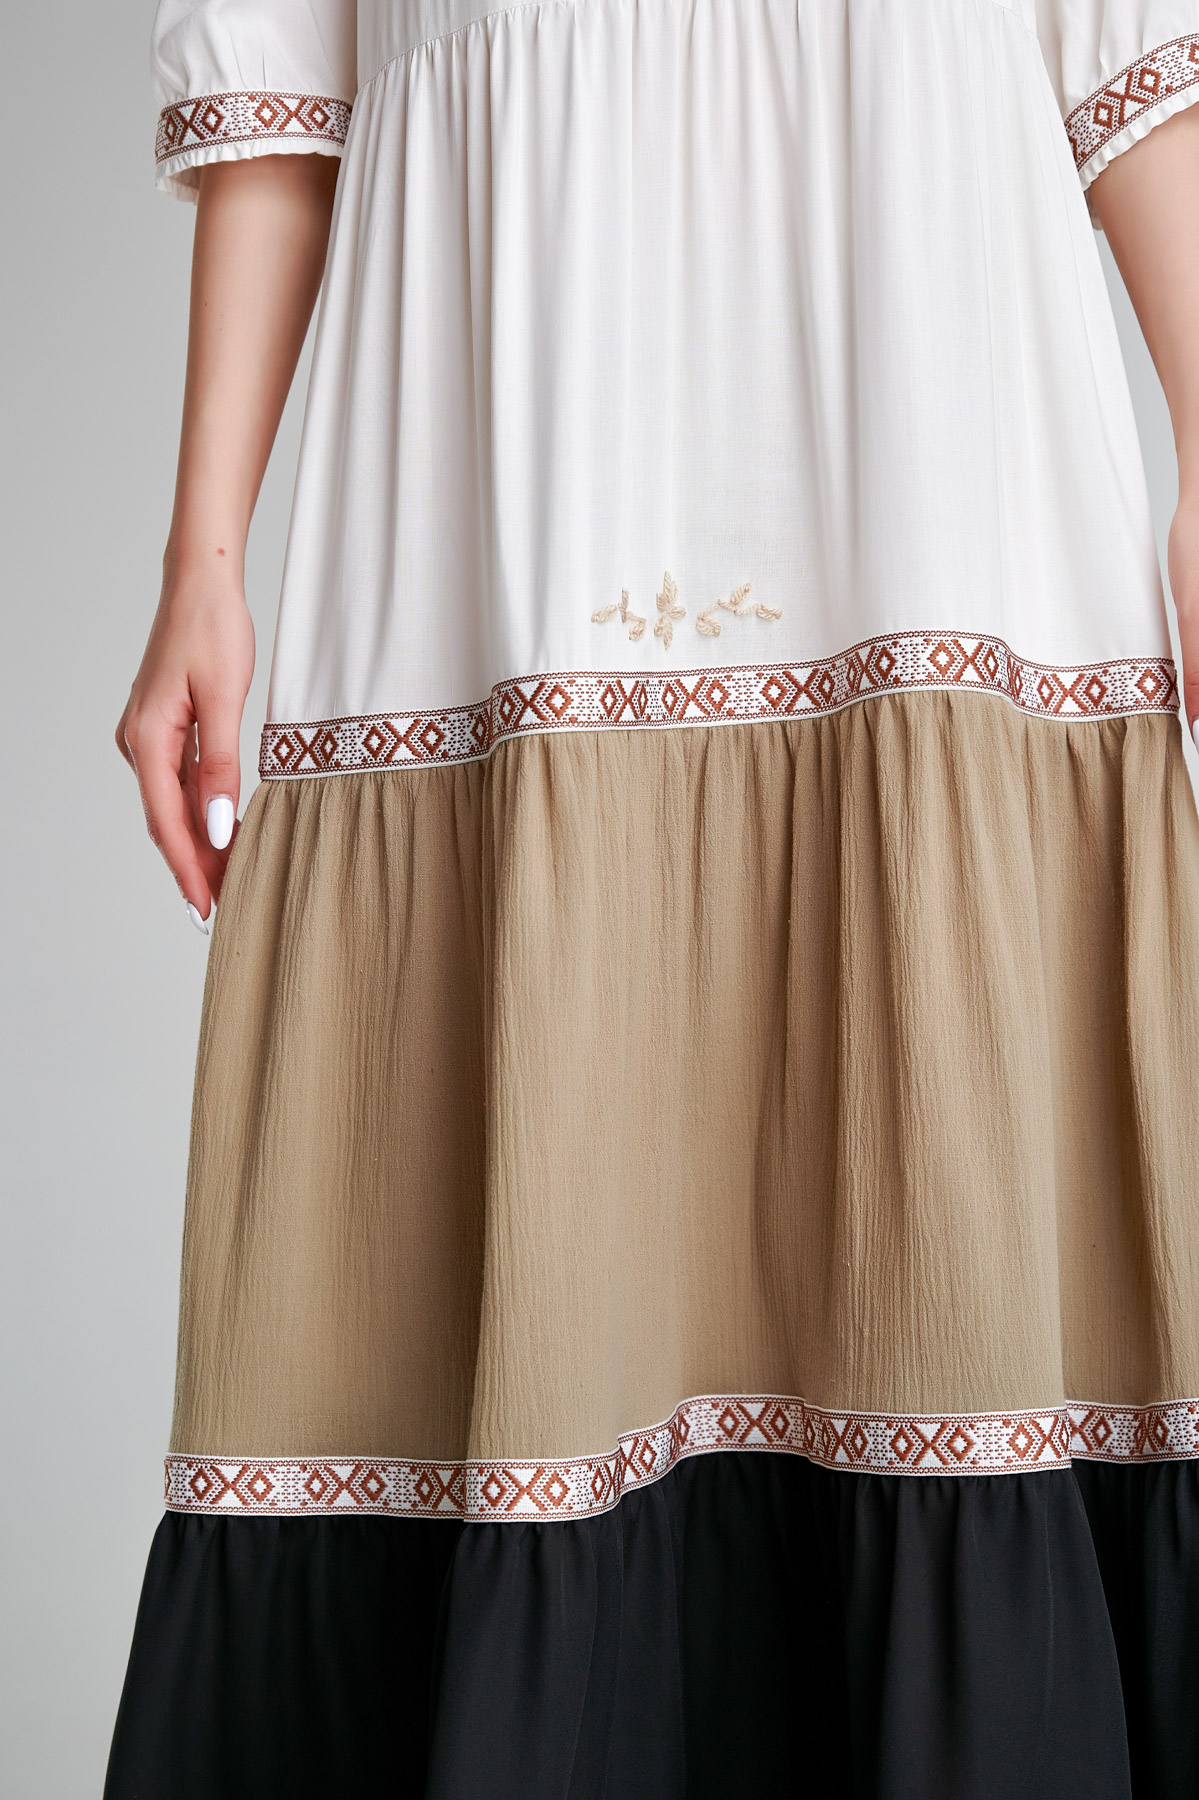 White MALIA casual dress with ruffles. Natural fabrics, original design, handmade embroidery